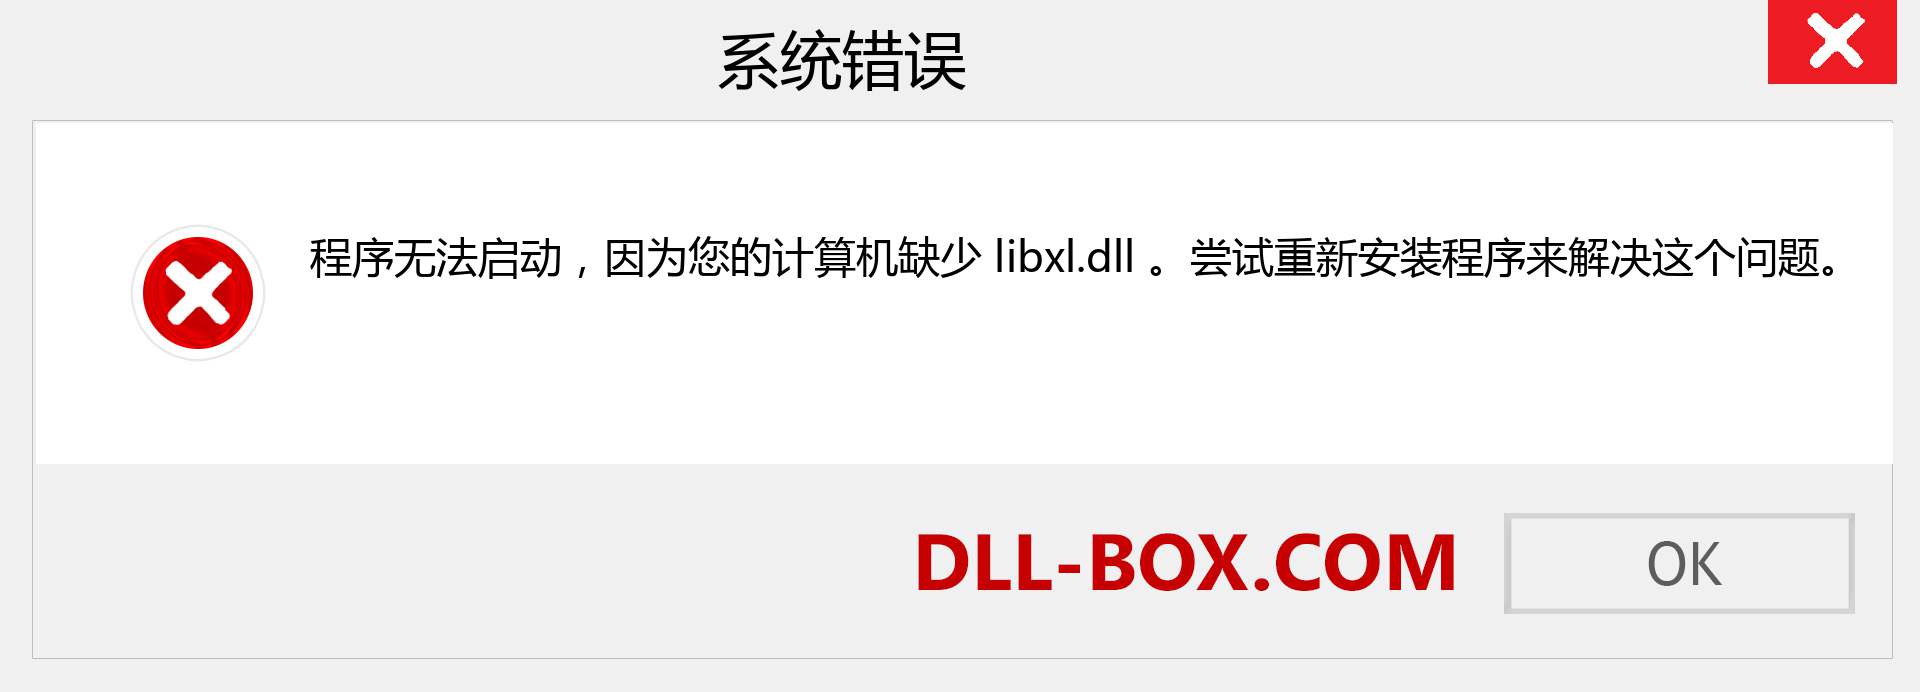 libxl.dll 文件丢失？。 适用于 Windows 7、8、10 的下载 - 修复 Windows、照片、图像上的 libxl dll 丢失错误